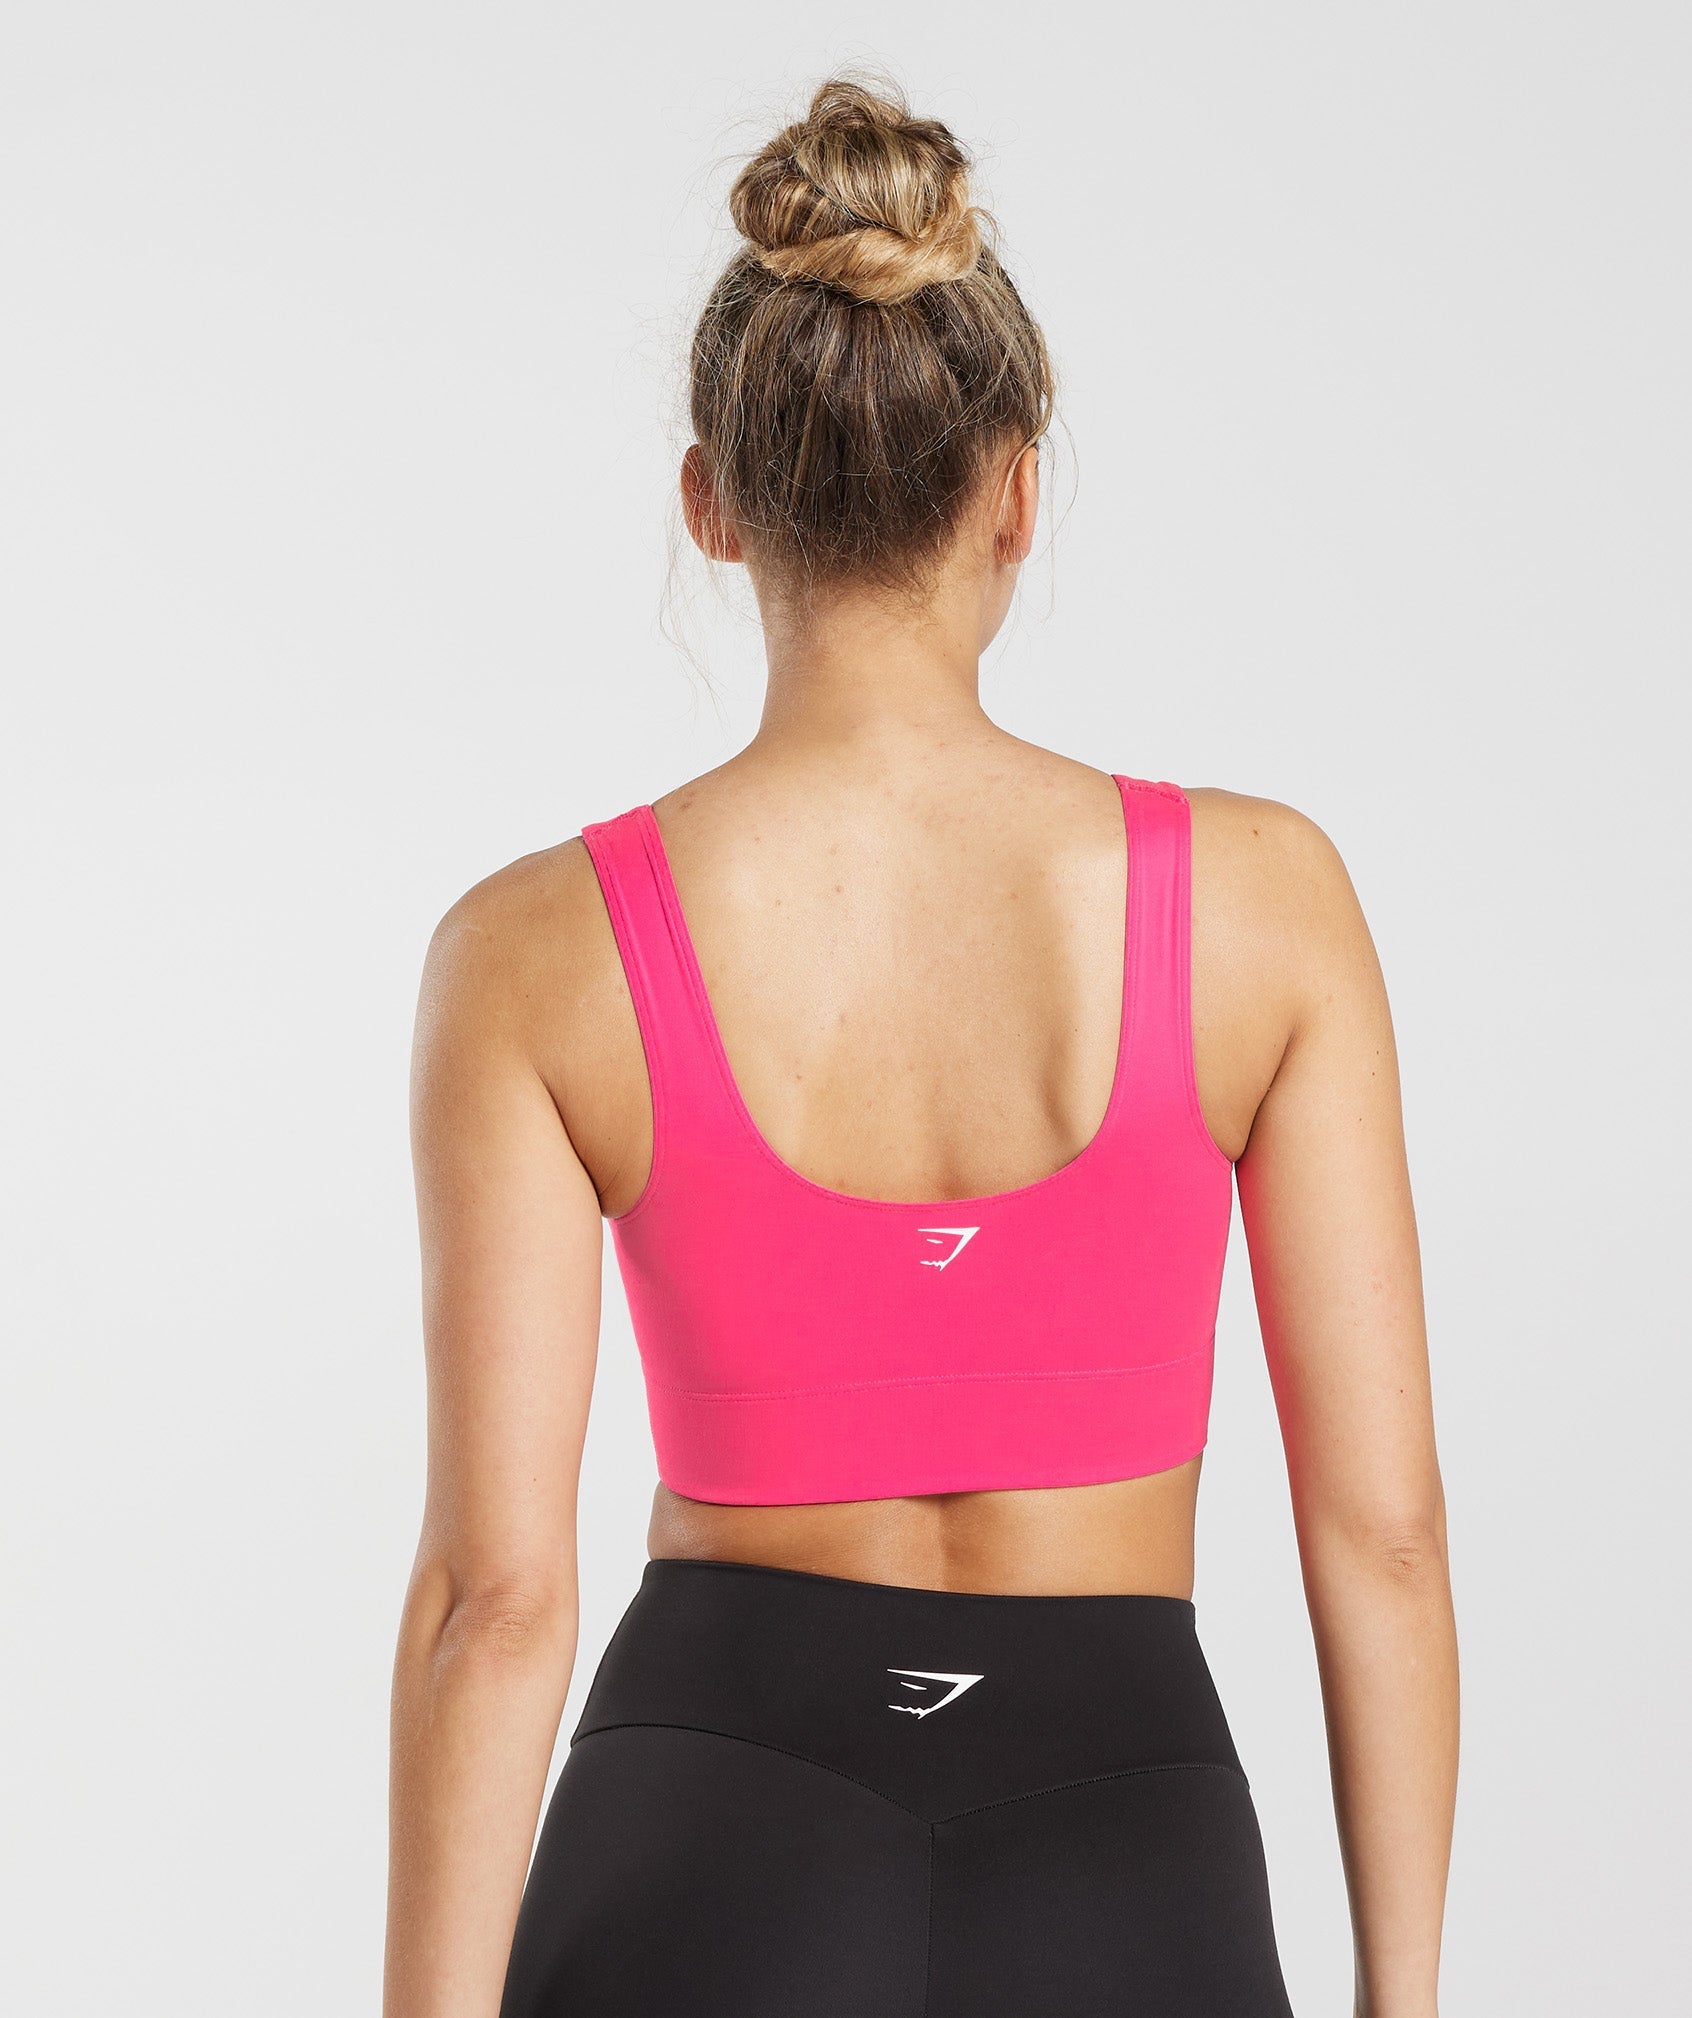 Cathalem Longline Sports Bras For Women Longline Padded Medium Support  Workout Crop Tops Built in Shelf Bra Wirefree Gym Yoga Tank Top,Black L